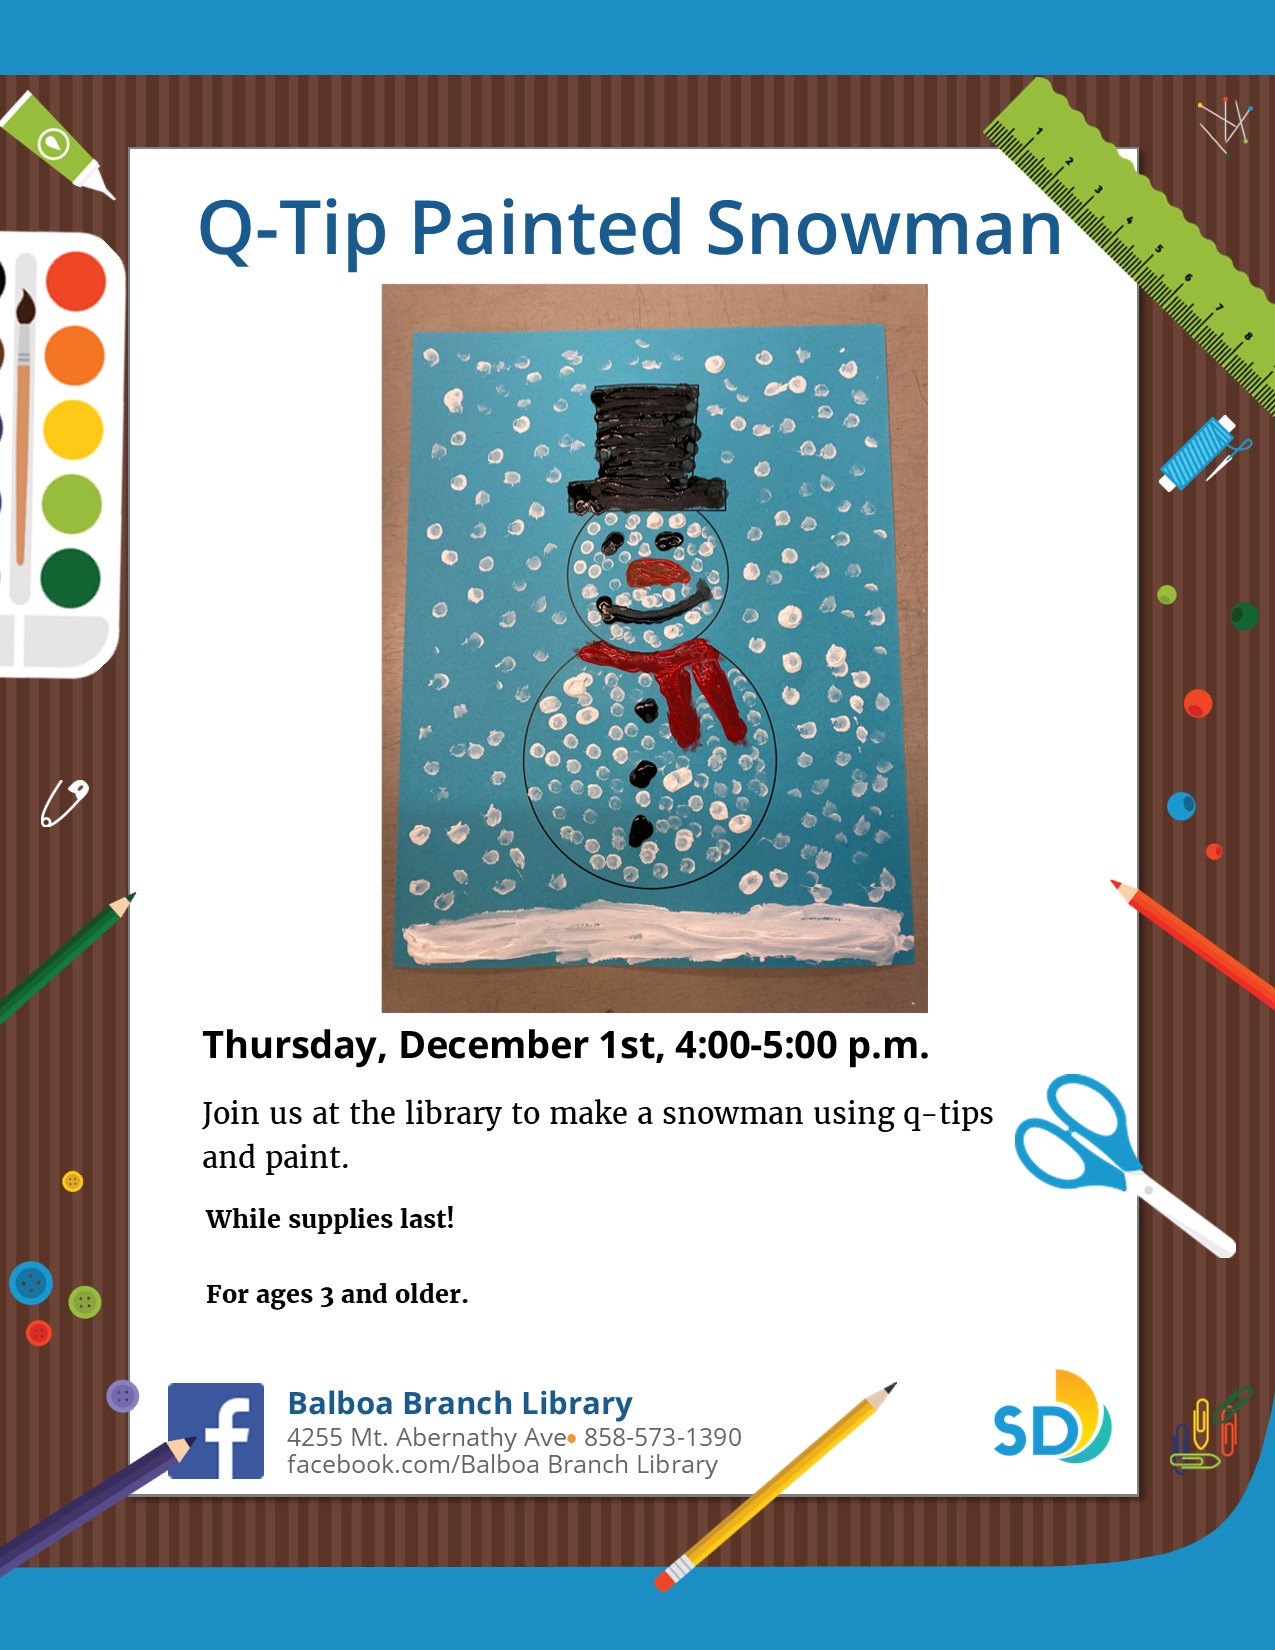 Q-Tip Painted Snowman flyer